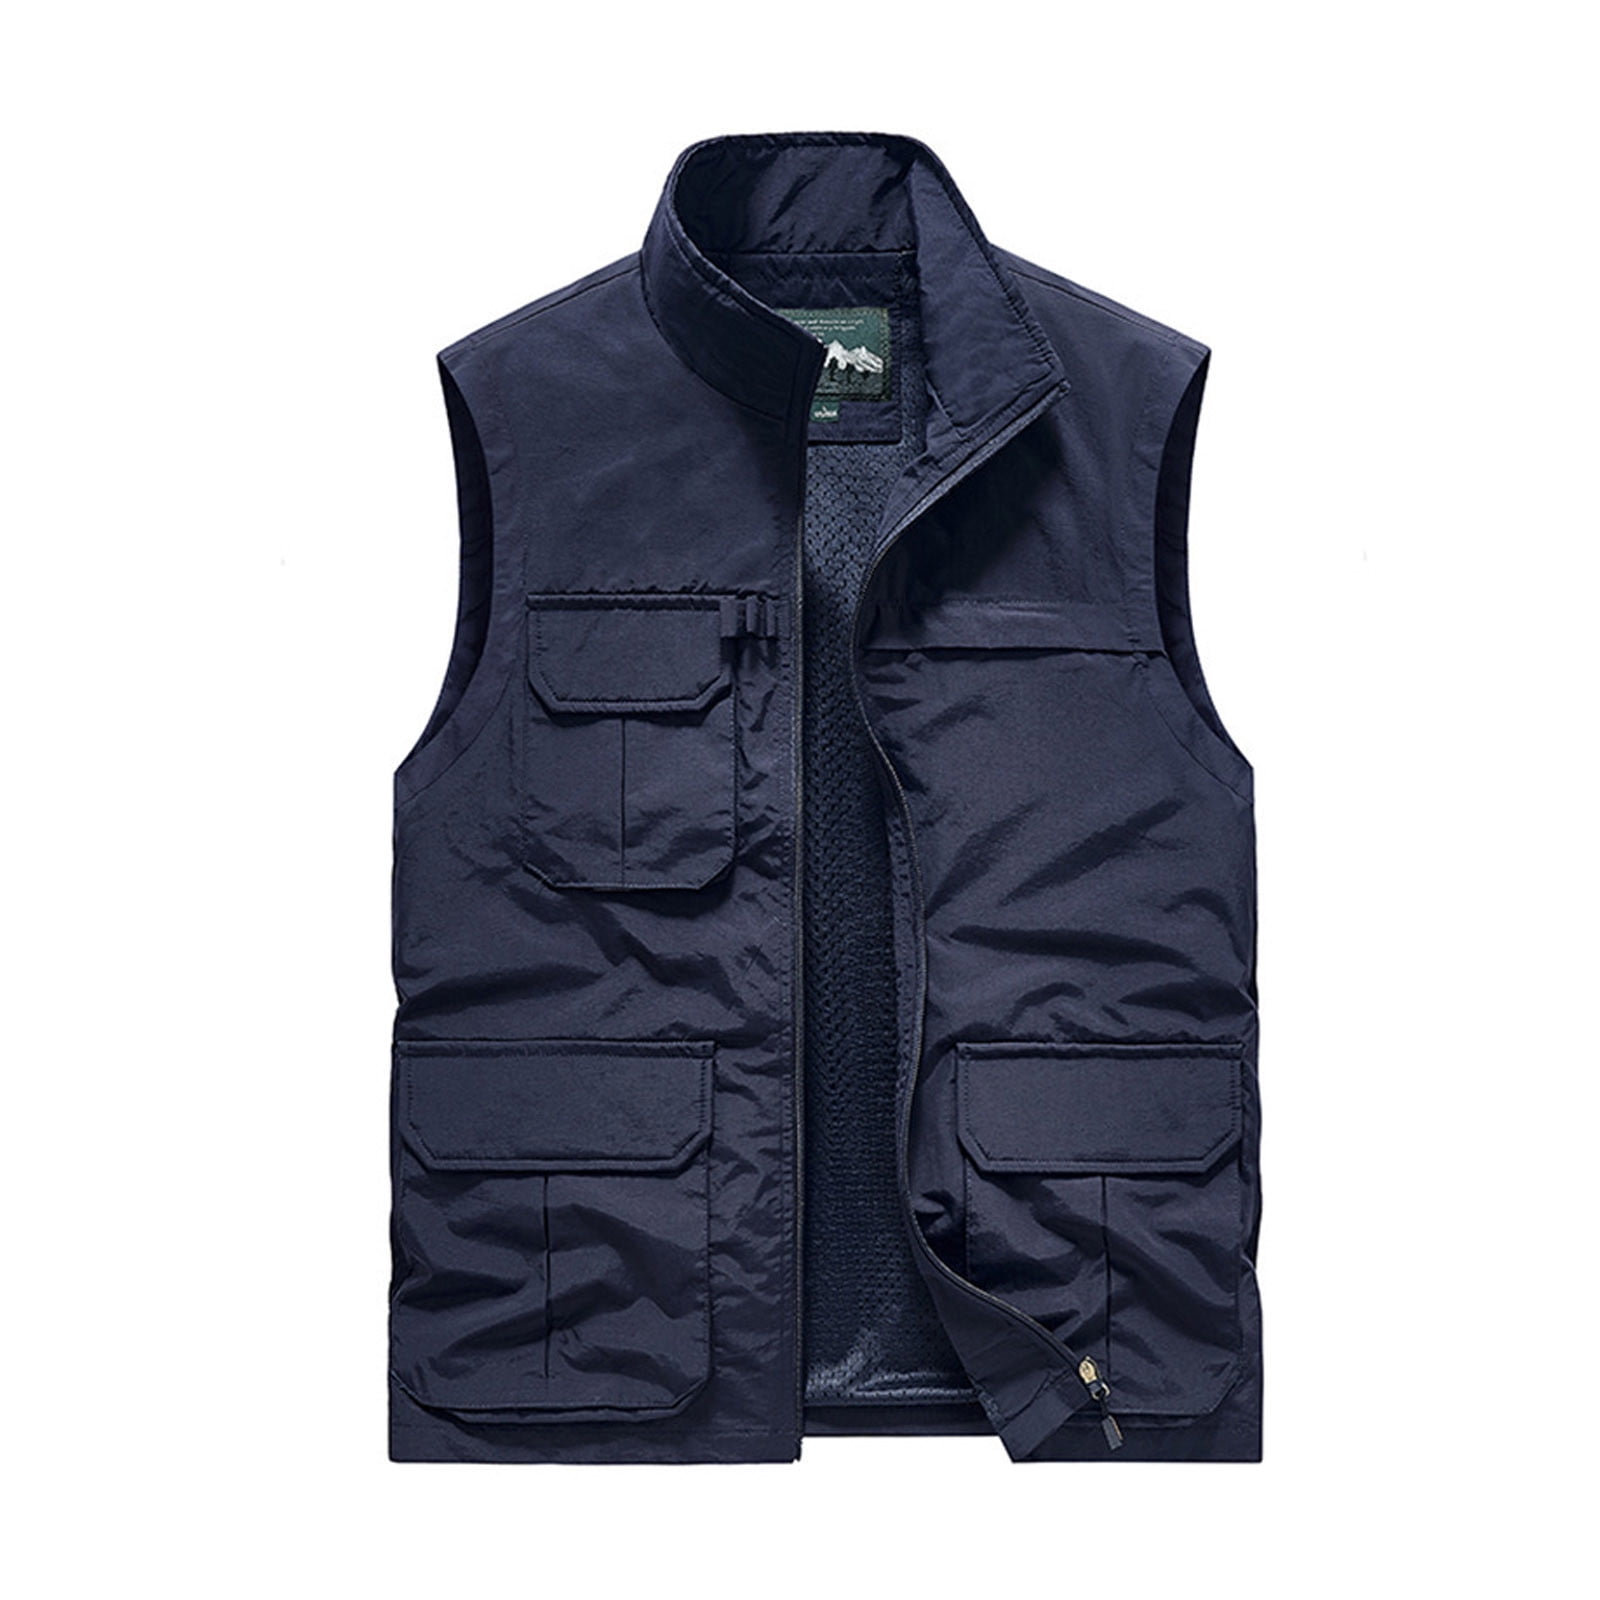 Honeeladyy Men's Outdoor Work Vest Fishing Travel Photo Cargo Vest Jacket  with Multi Pockets Army Green XL 